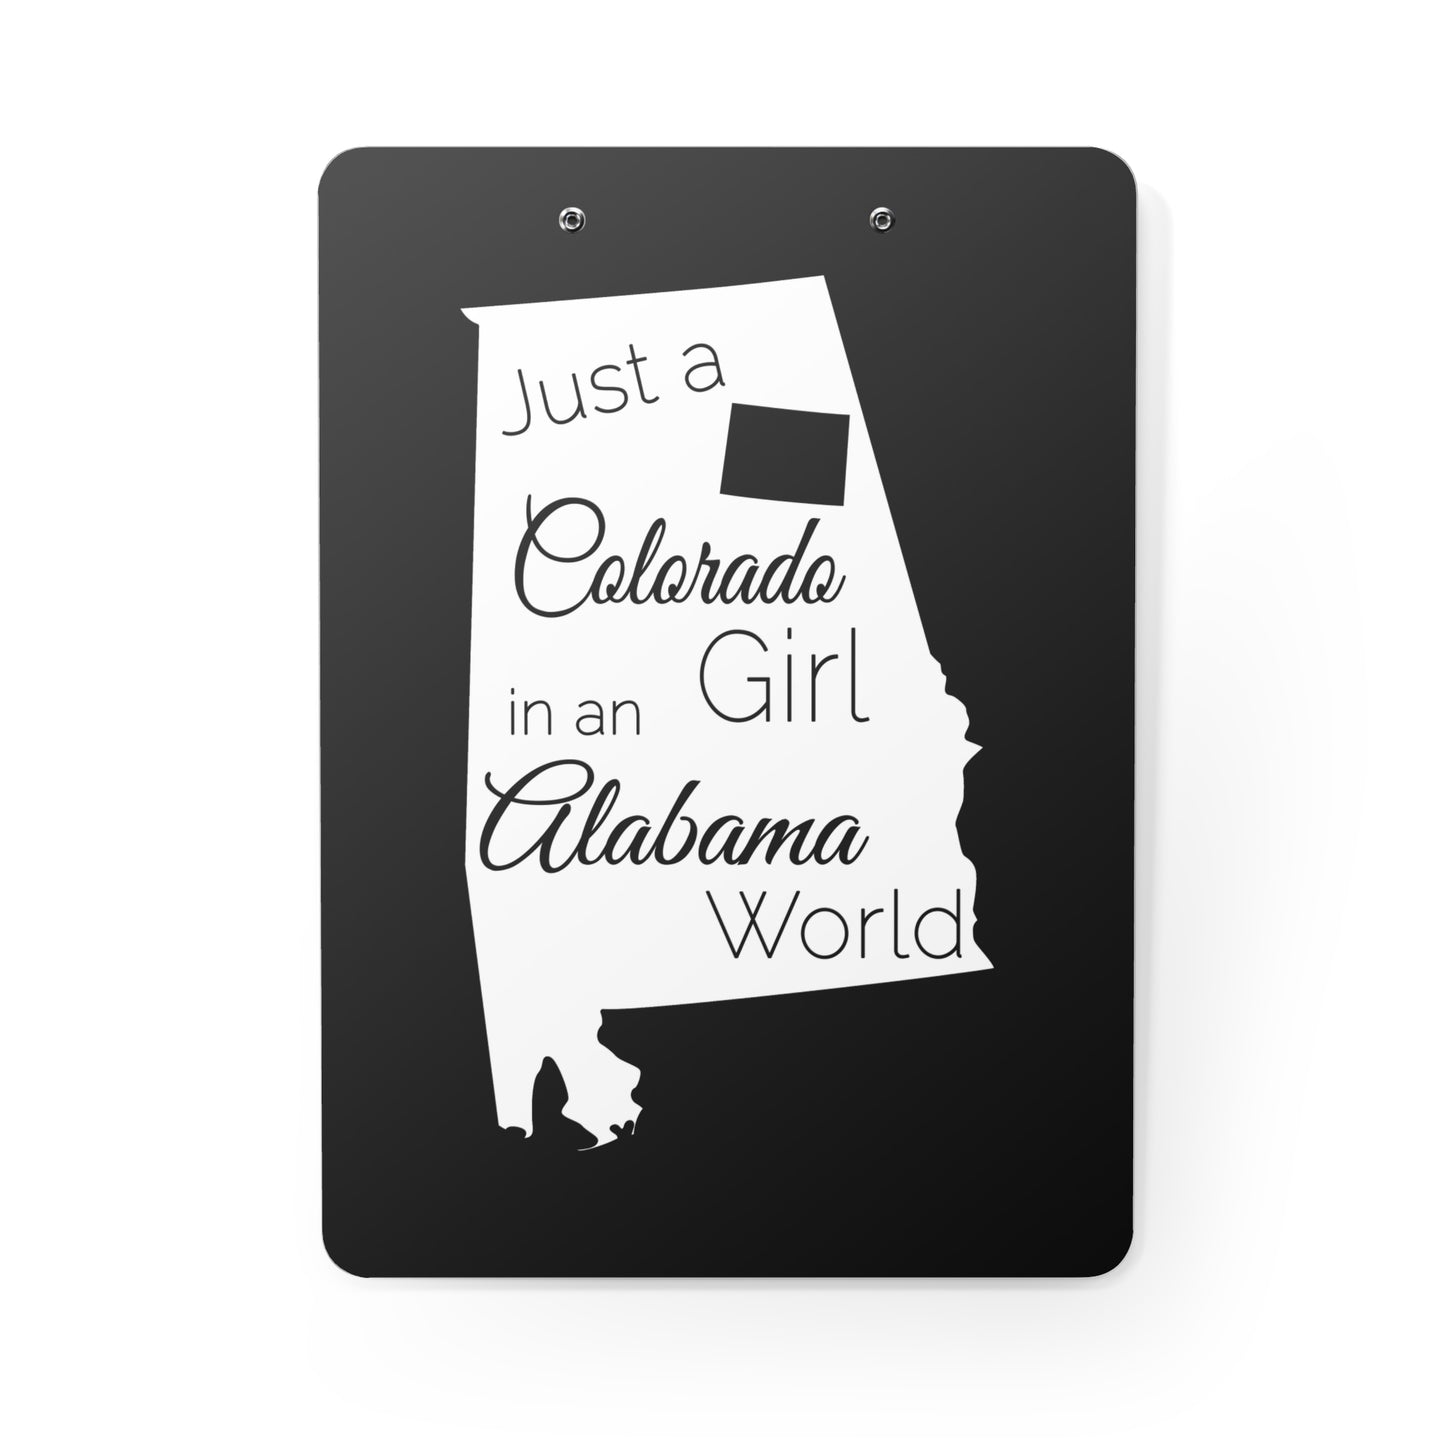 Just a Colorado Girl in an Alabama World Clipboard